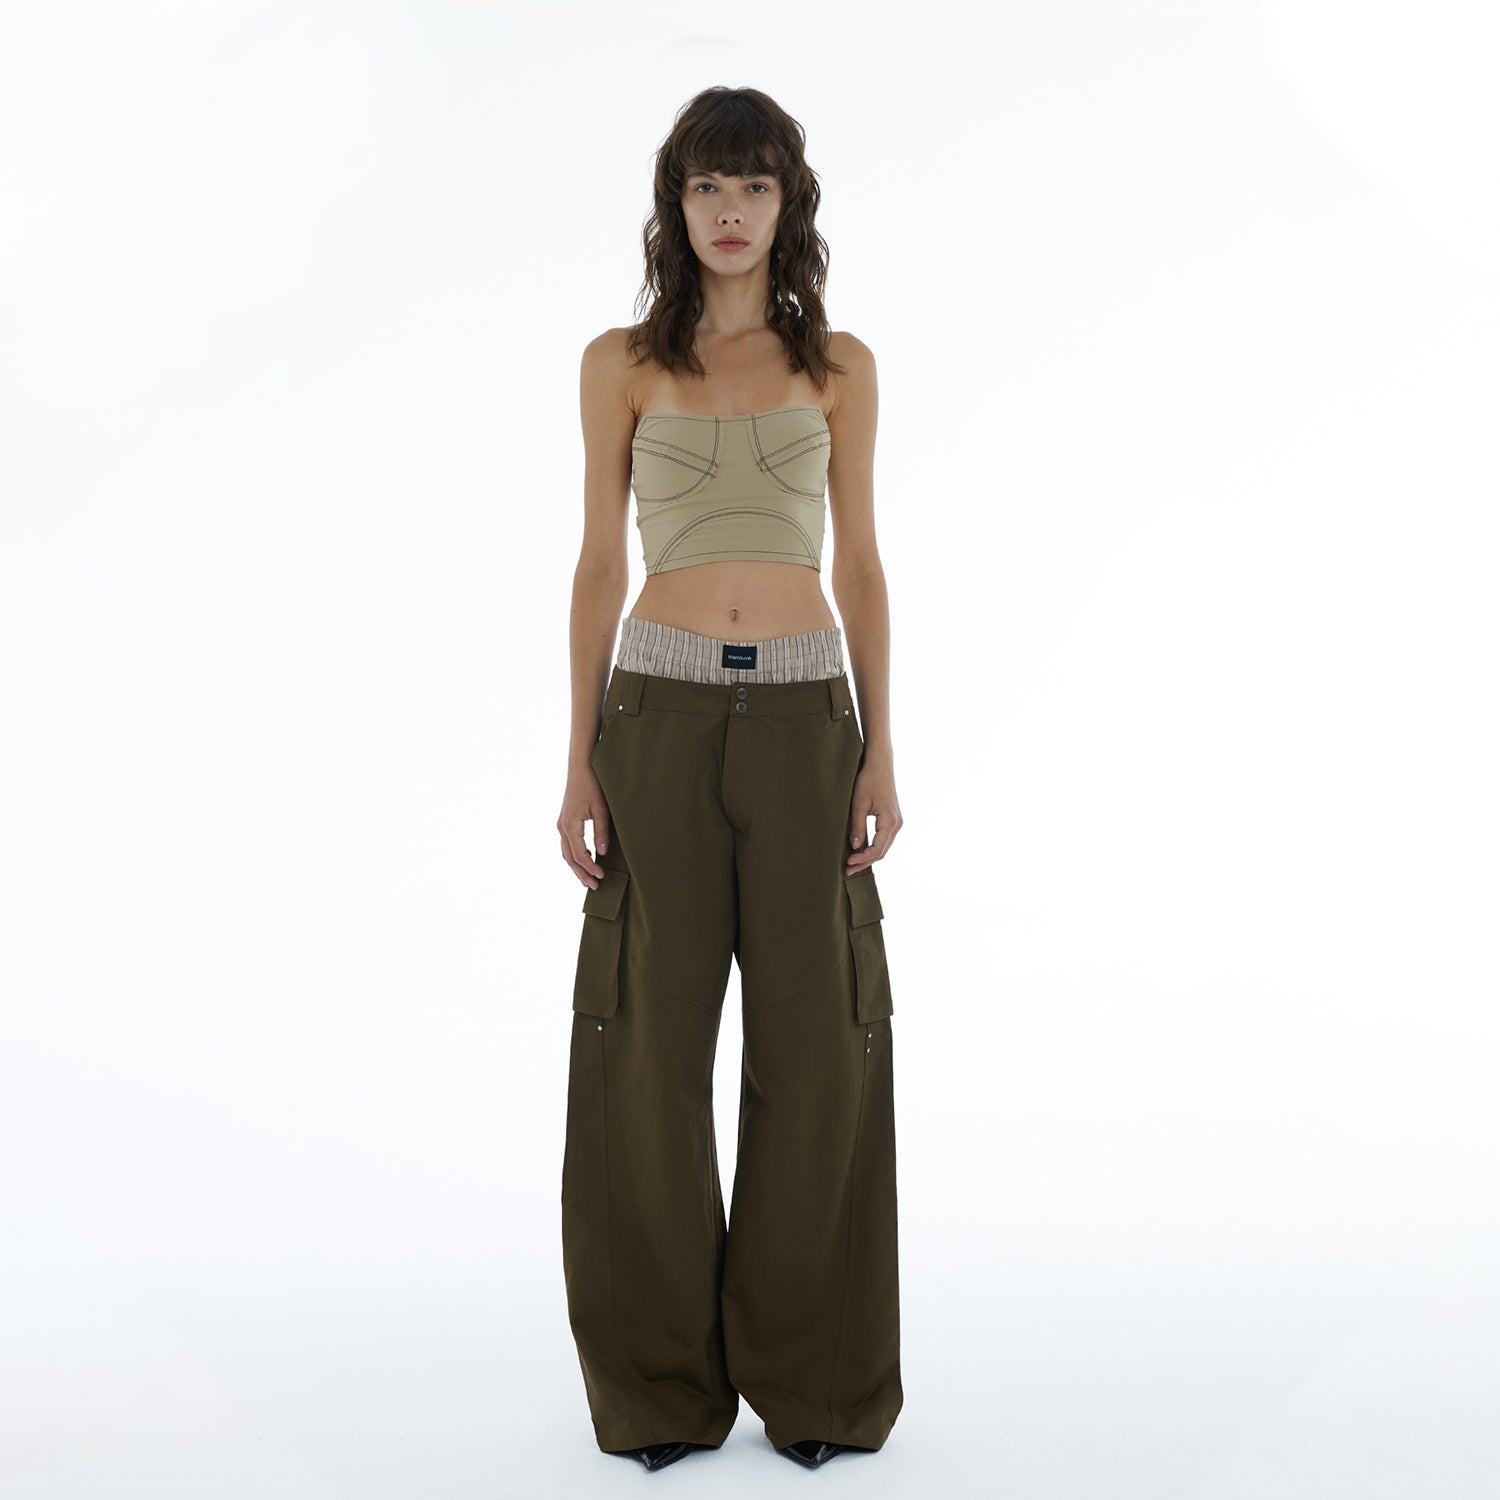 Buy Babes Loose Multi-pocket Lounge Pants by Body404